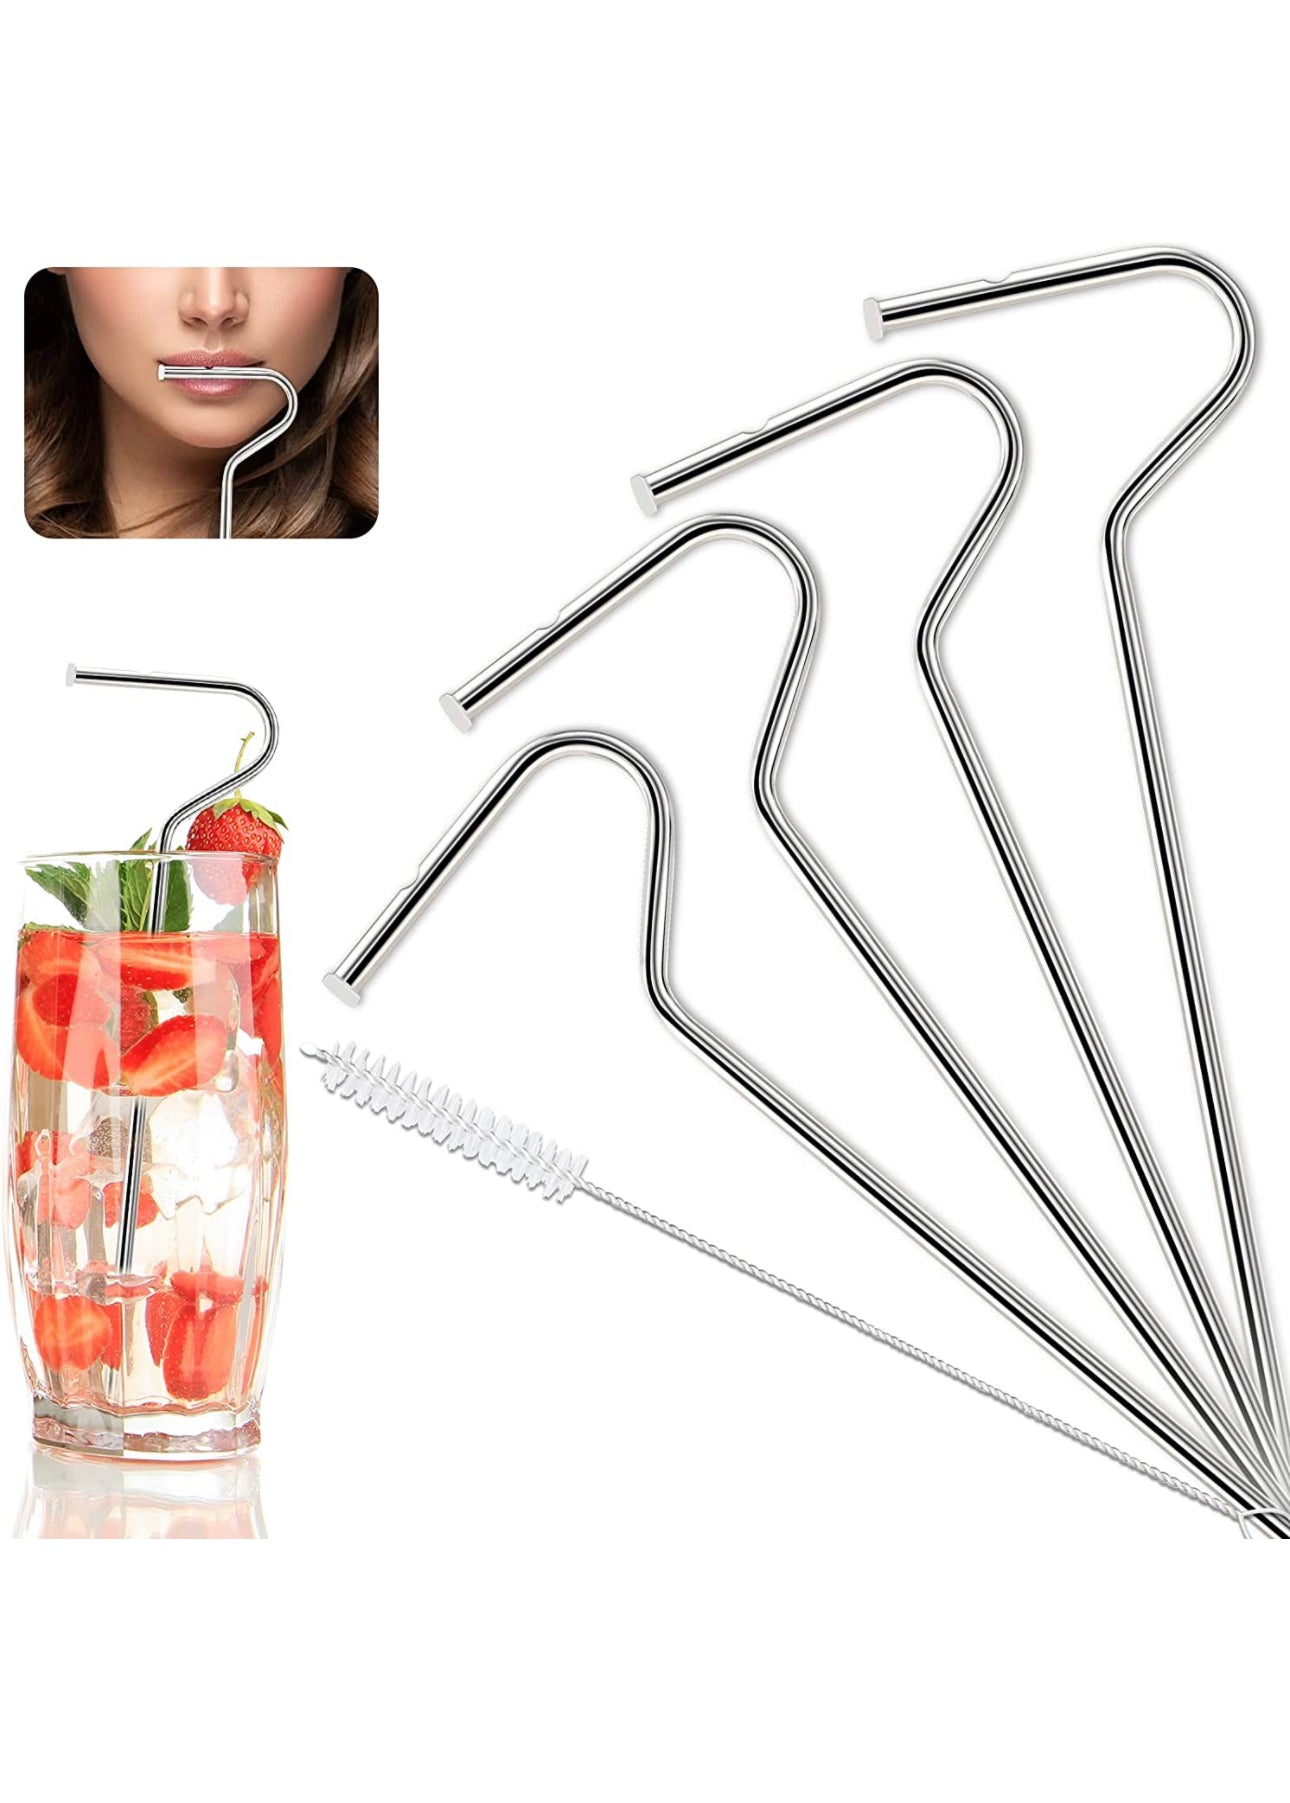 Anti Lip Wrinkle Straw Reusable Glass Drinking Straw Tiktok Anti